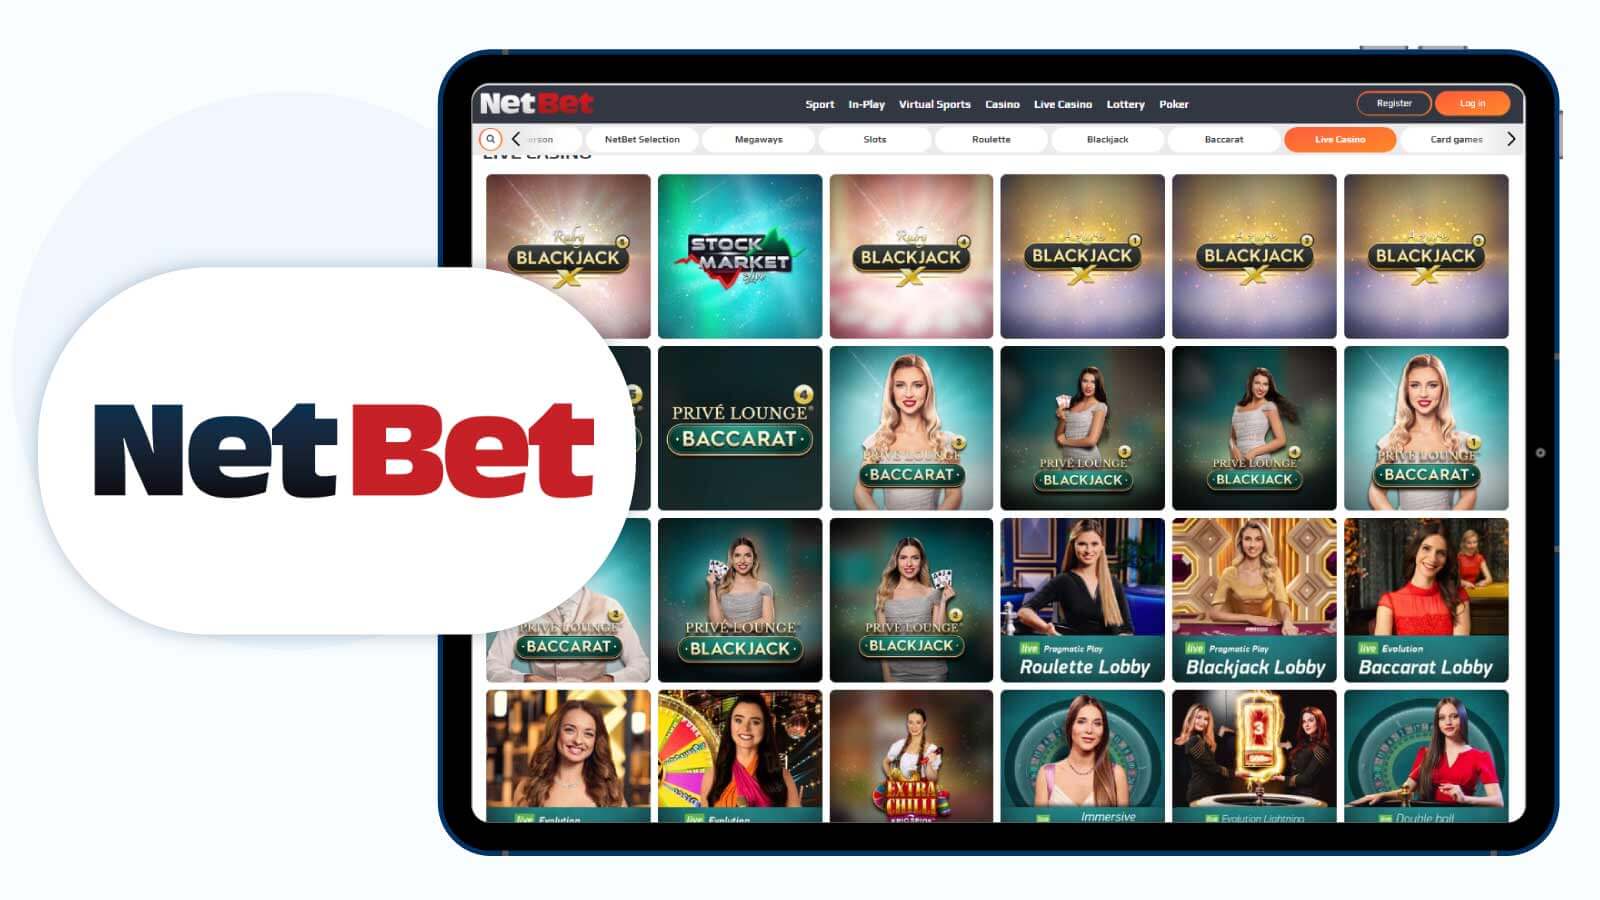 NetBet – Best Deposit 2 Pound Casino for Live Dealer Games